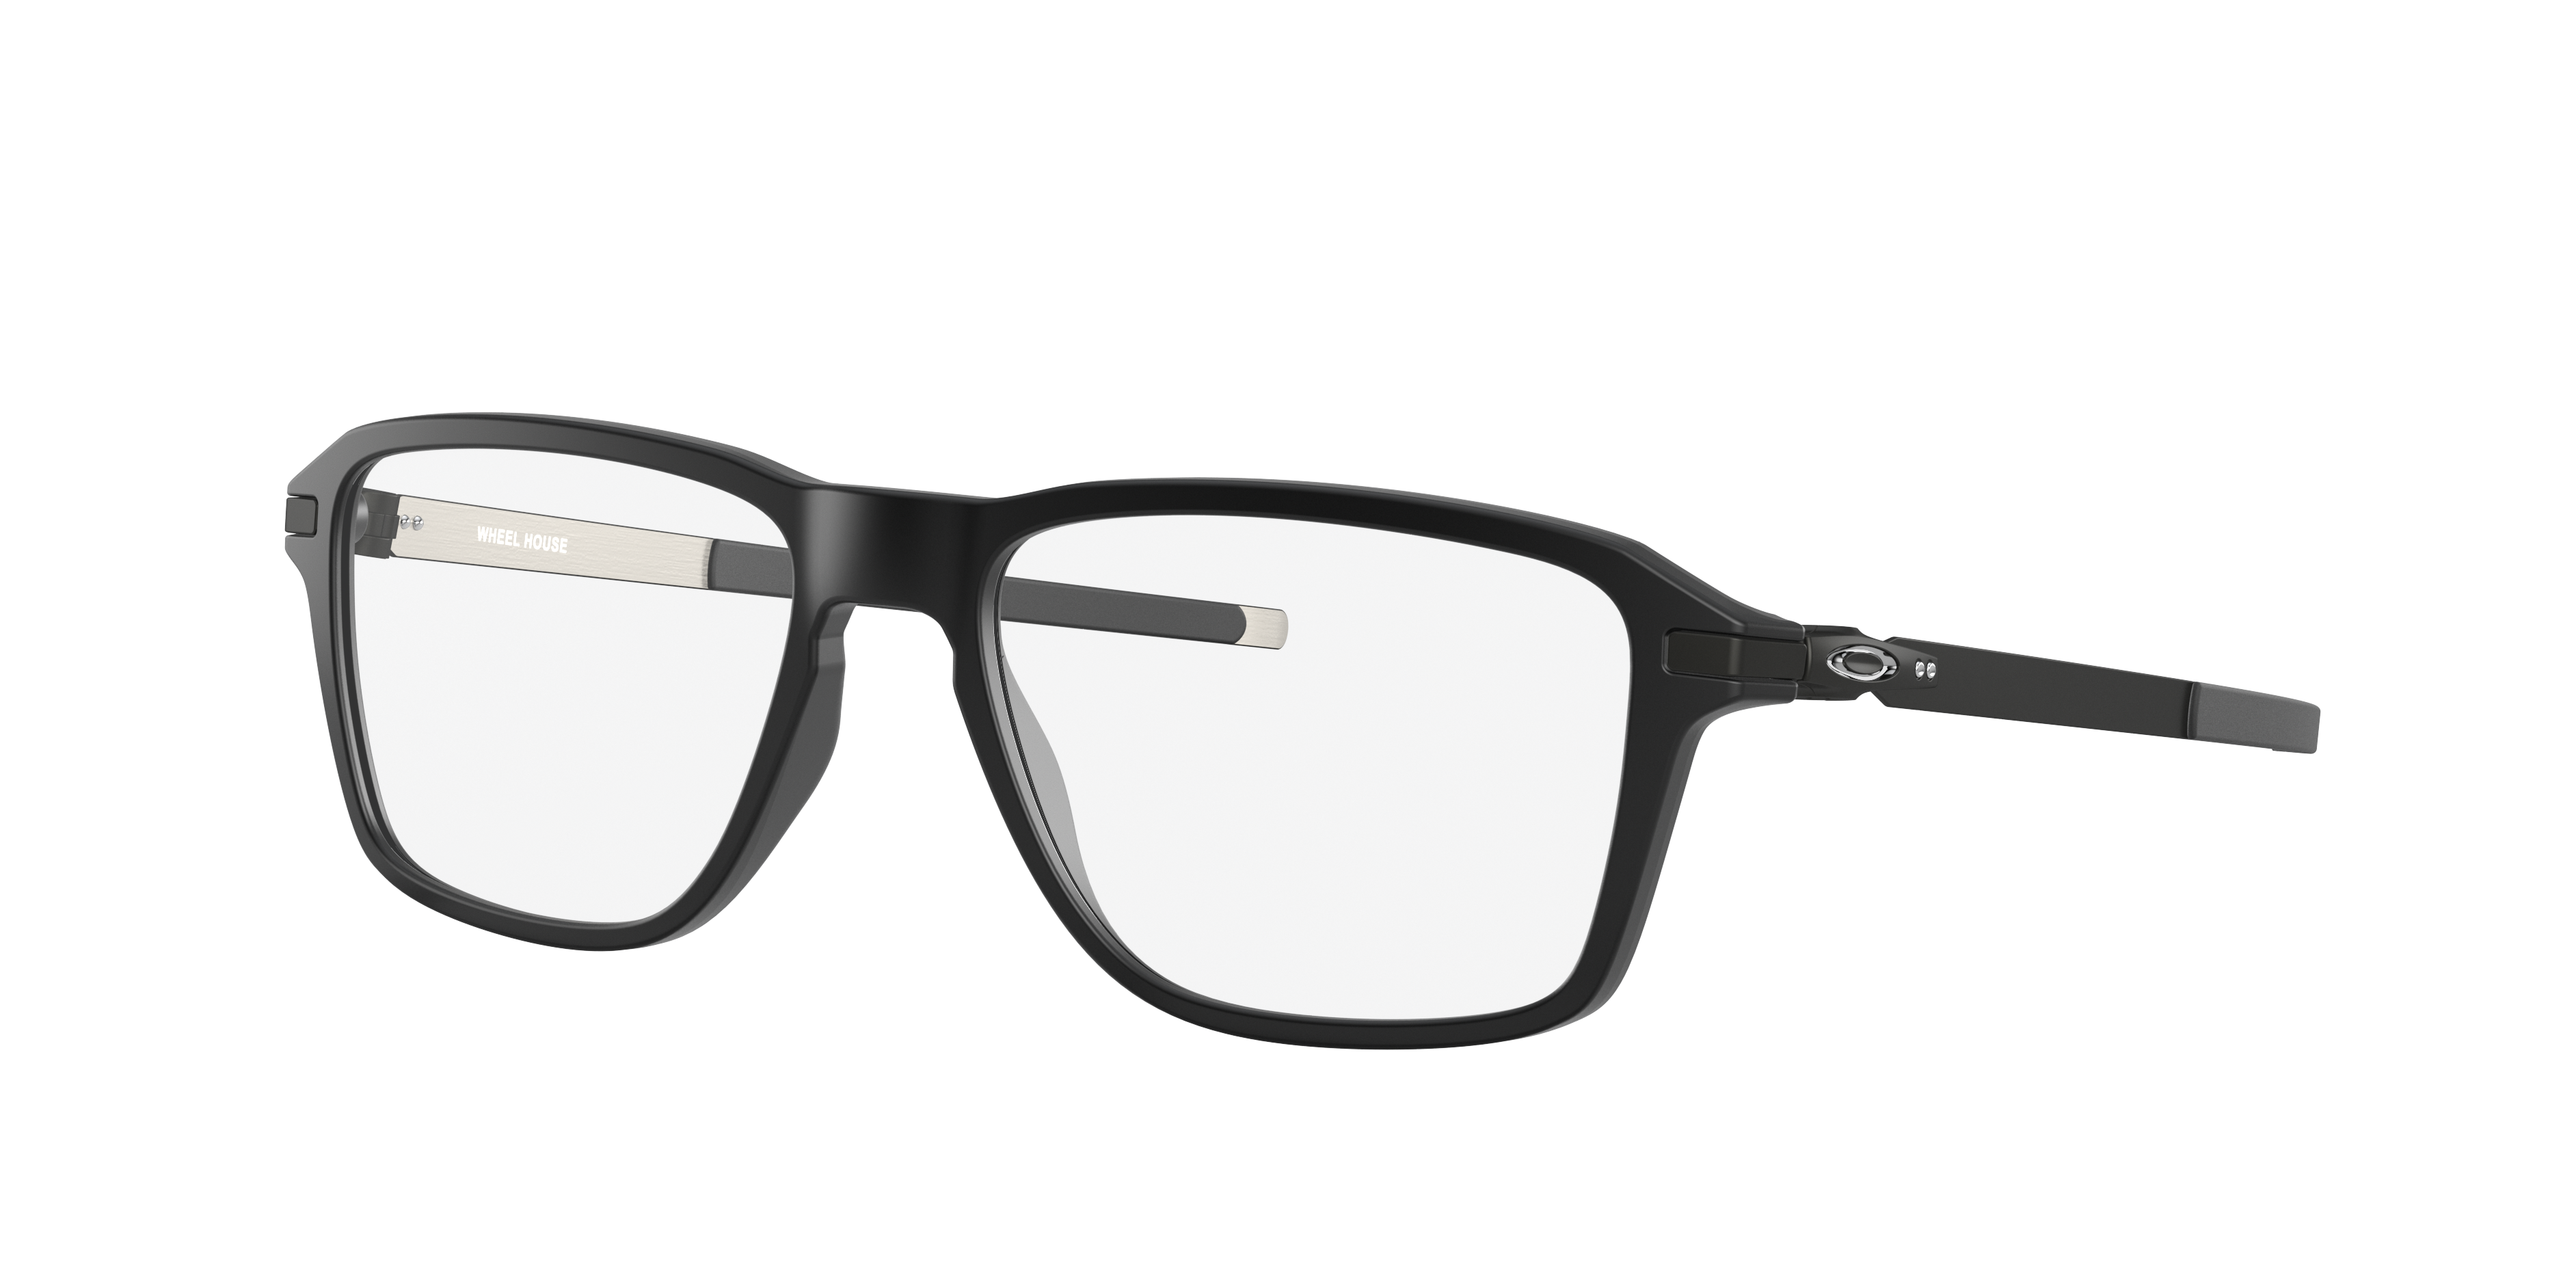 rx oakley sunglasses online